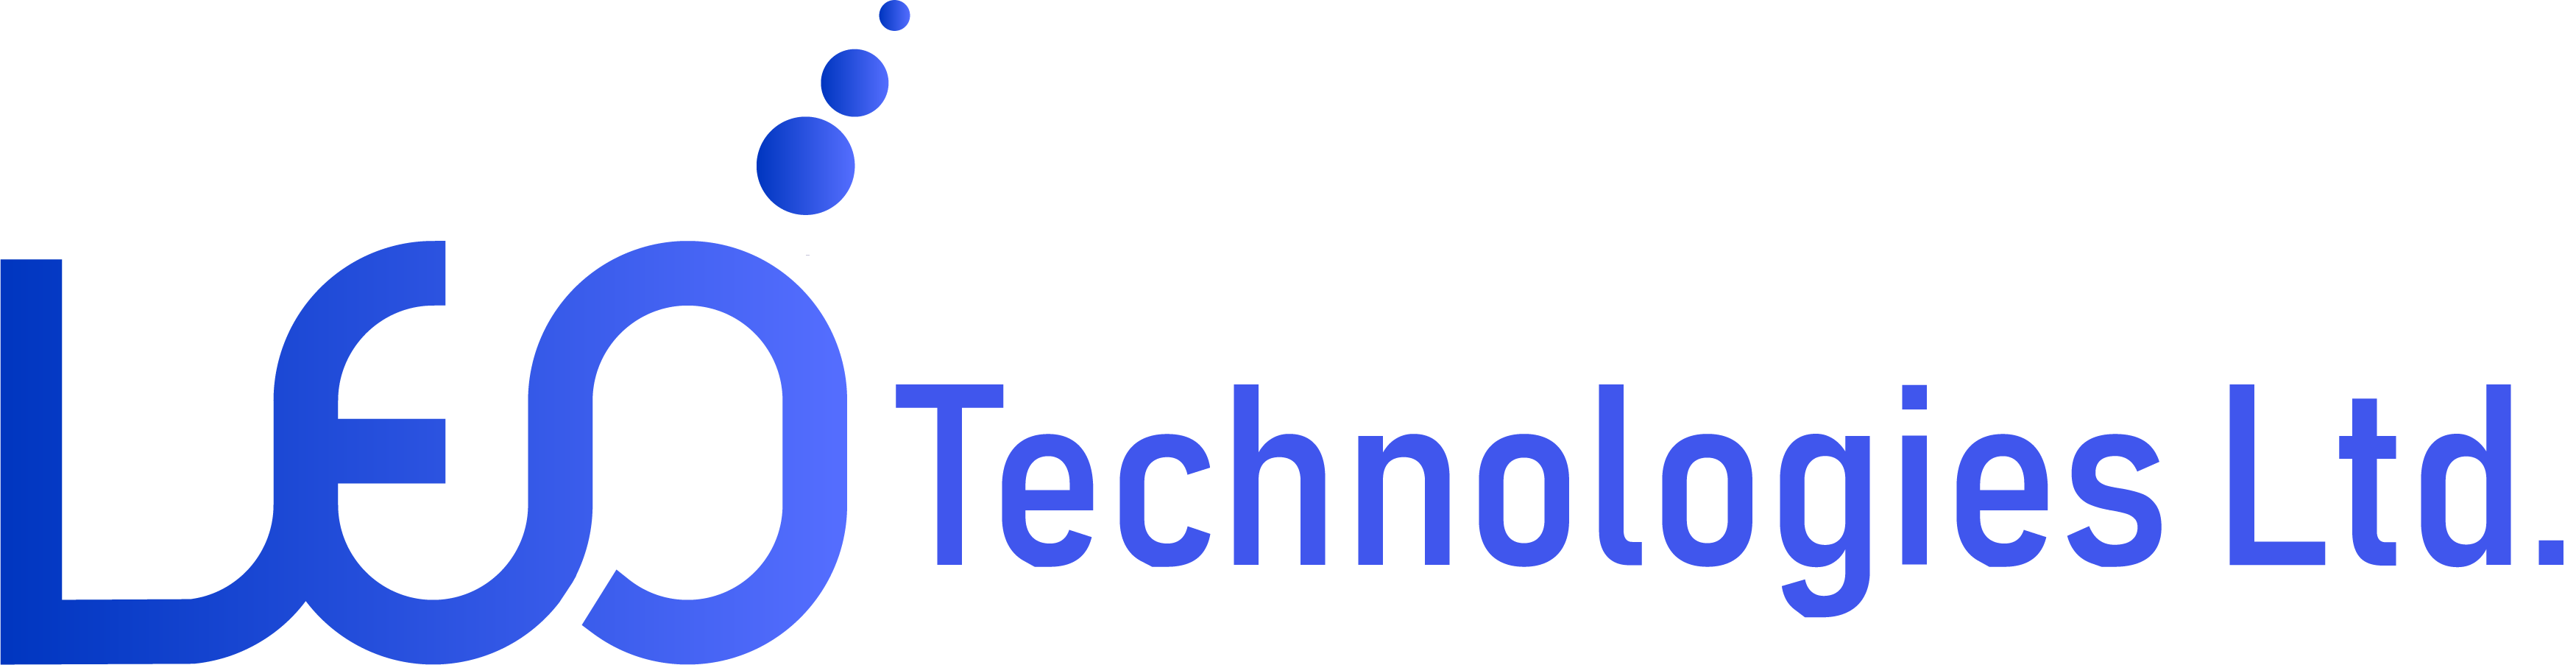 Leo Technologies Limited